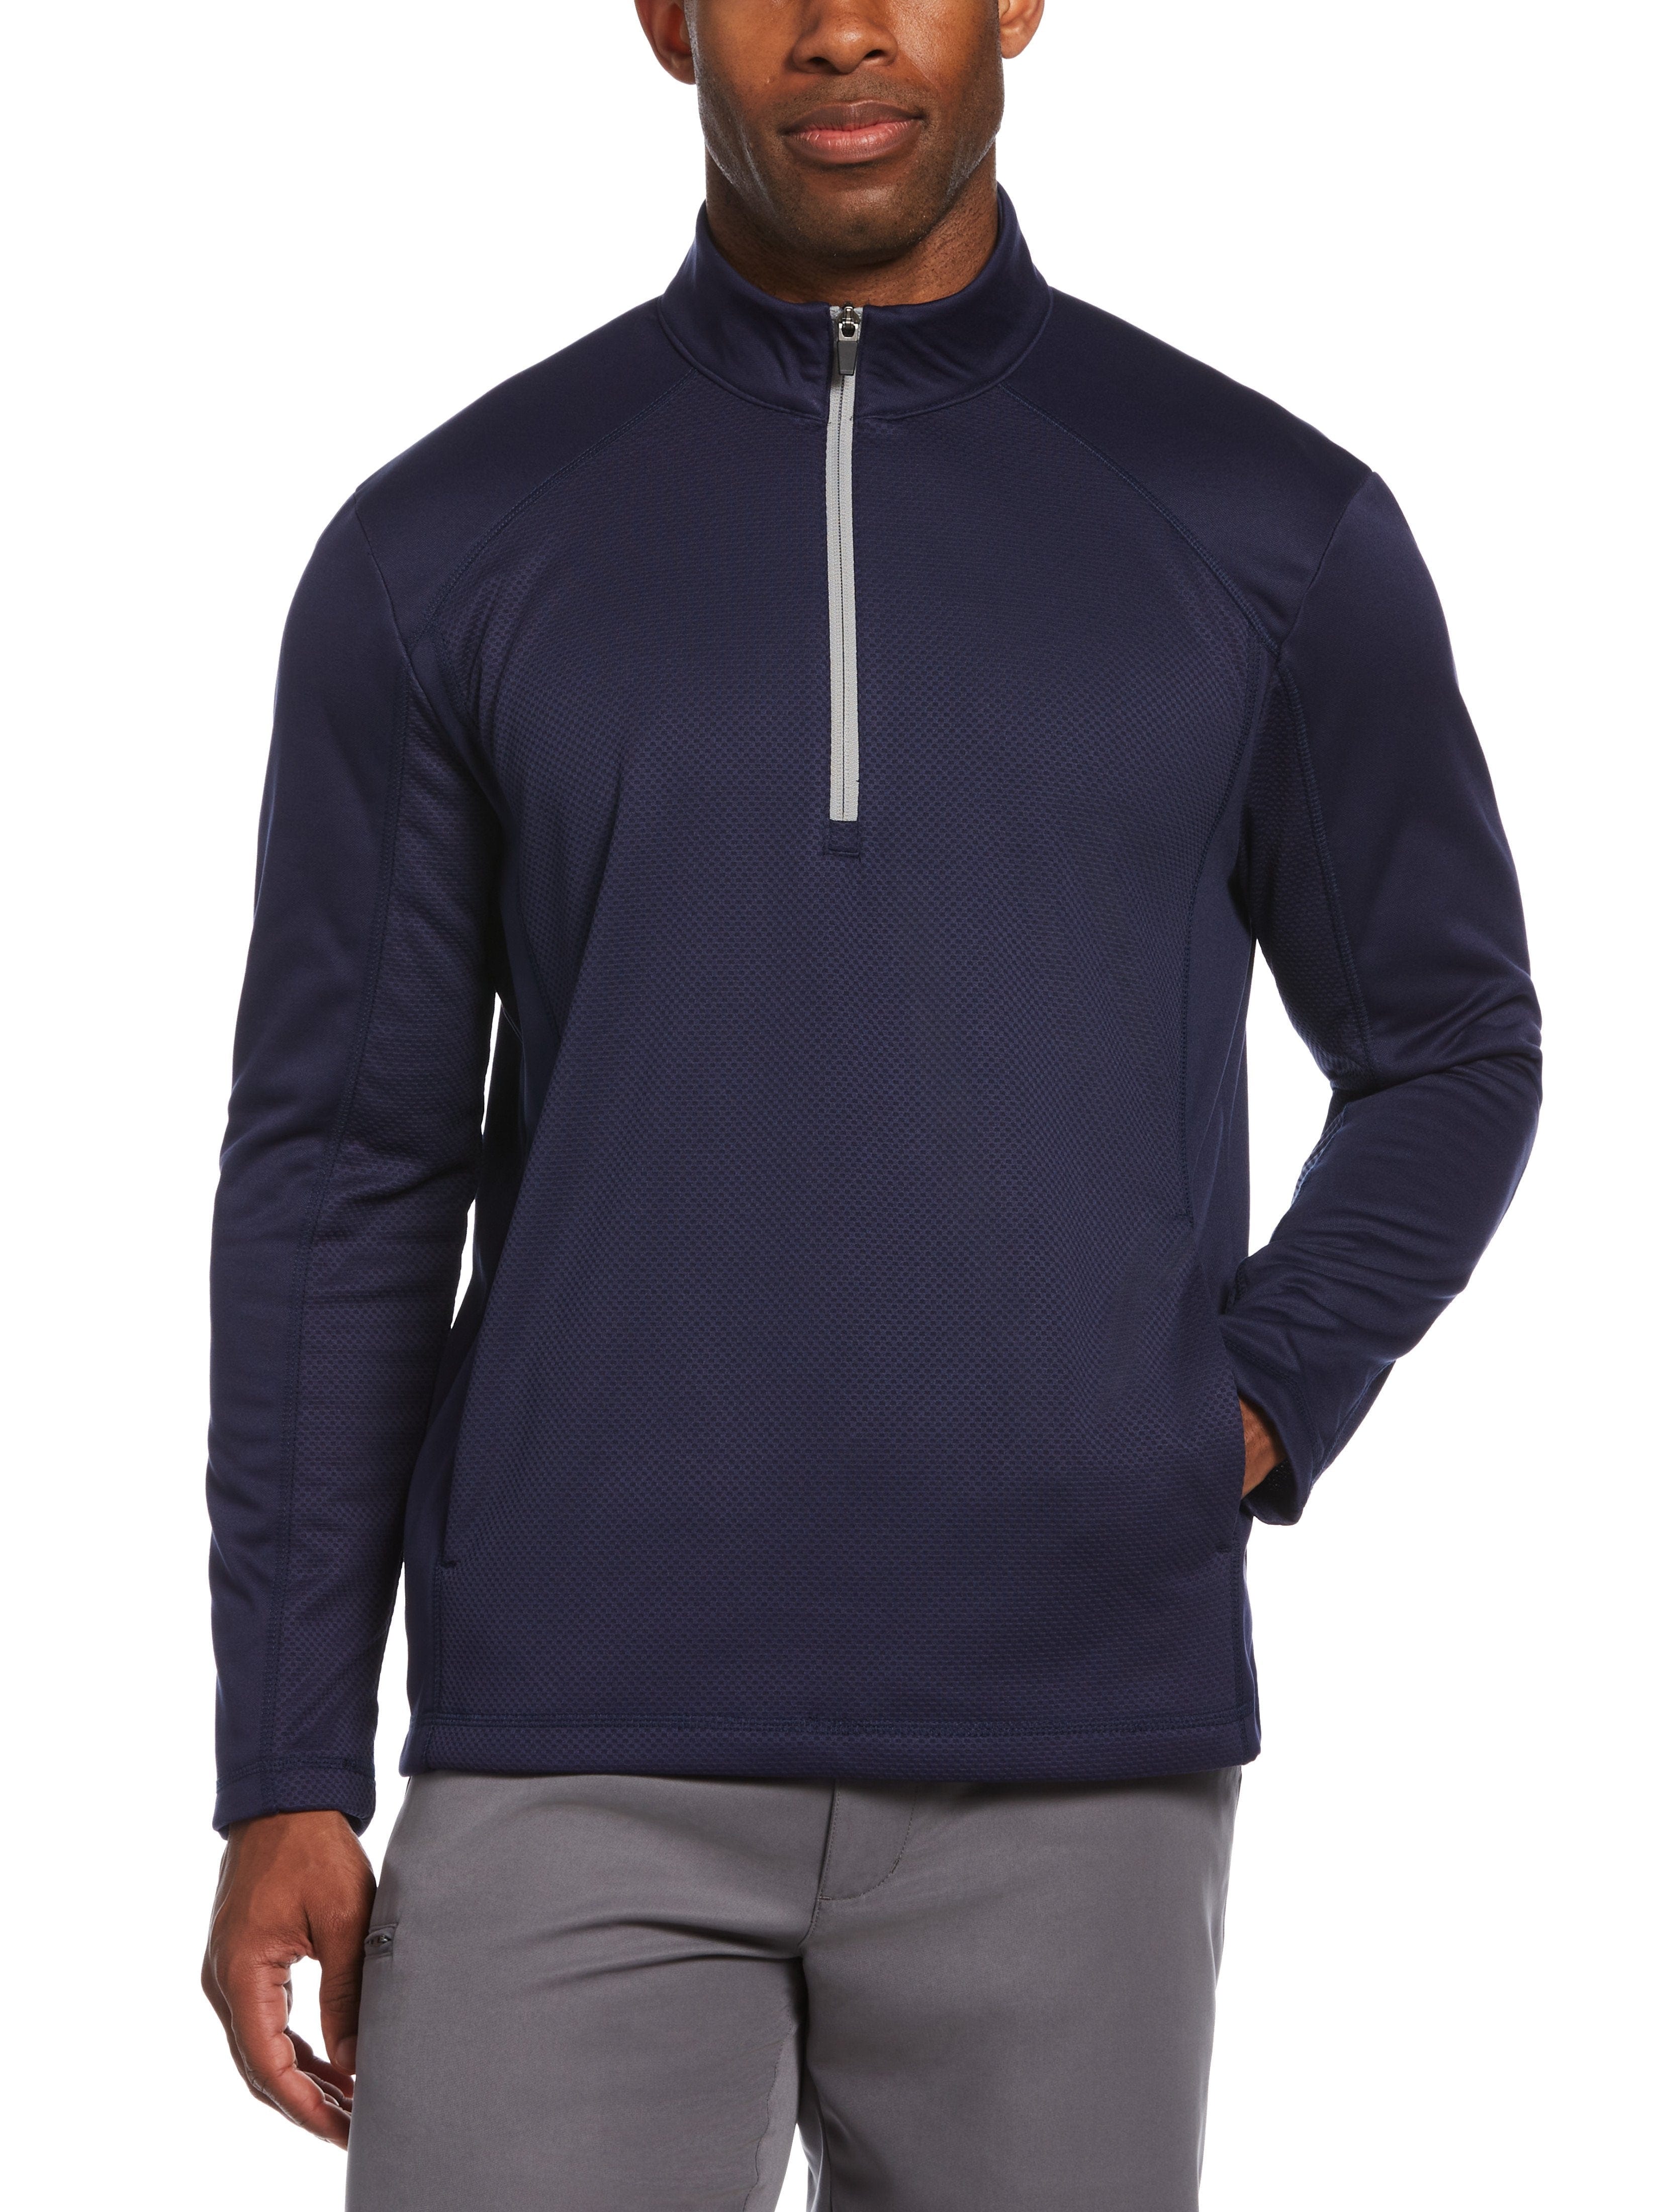 PGA TOUR Apparel Mens Mixed Texture Fleece 1/4 Zip Golf Jacket Top, Size XL, Navy Blue, 100% Polyester | Golf Apparel Shop